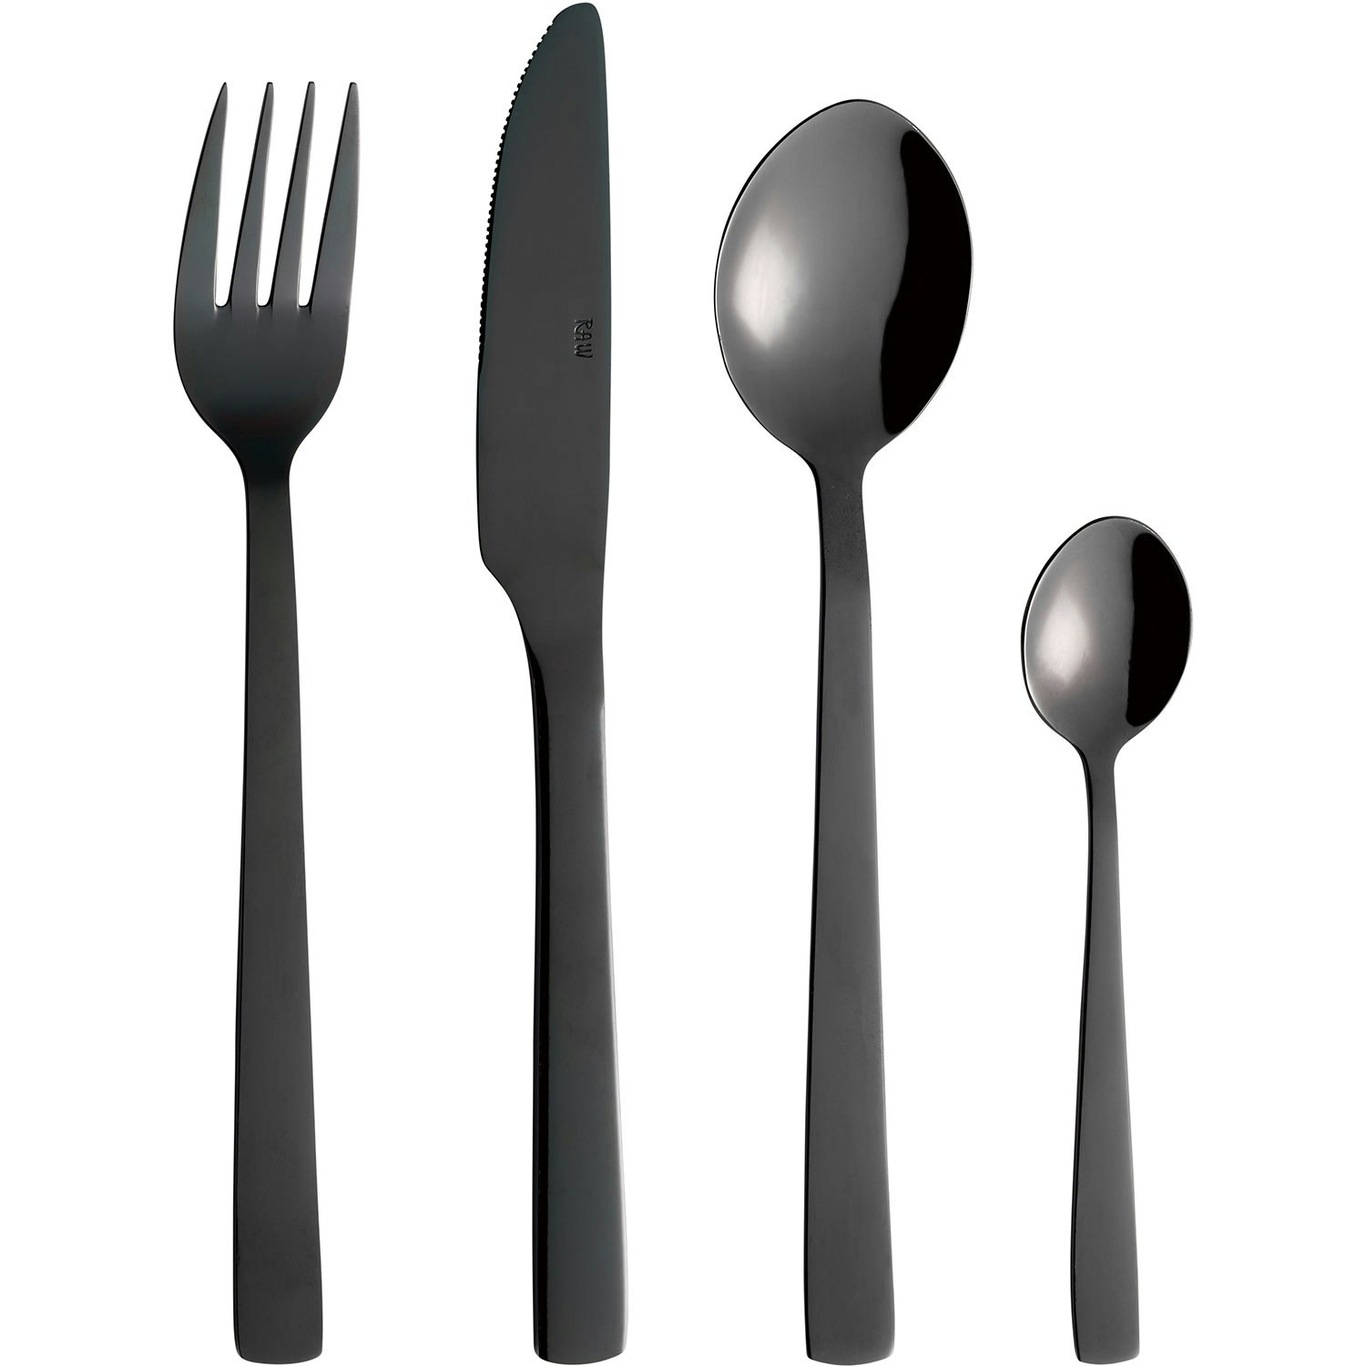 Raw Cutlery Set 24-pack, Black